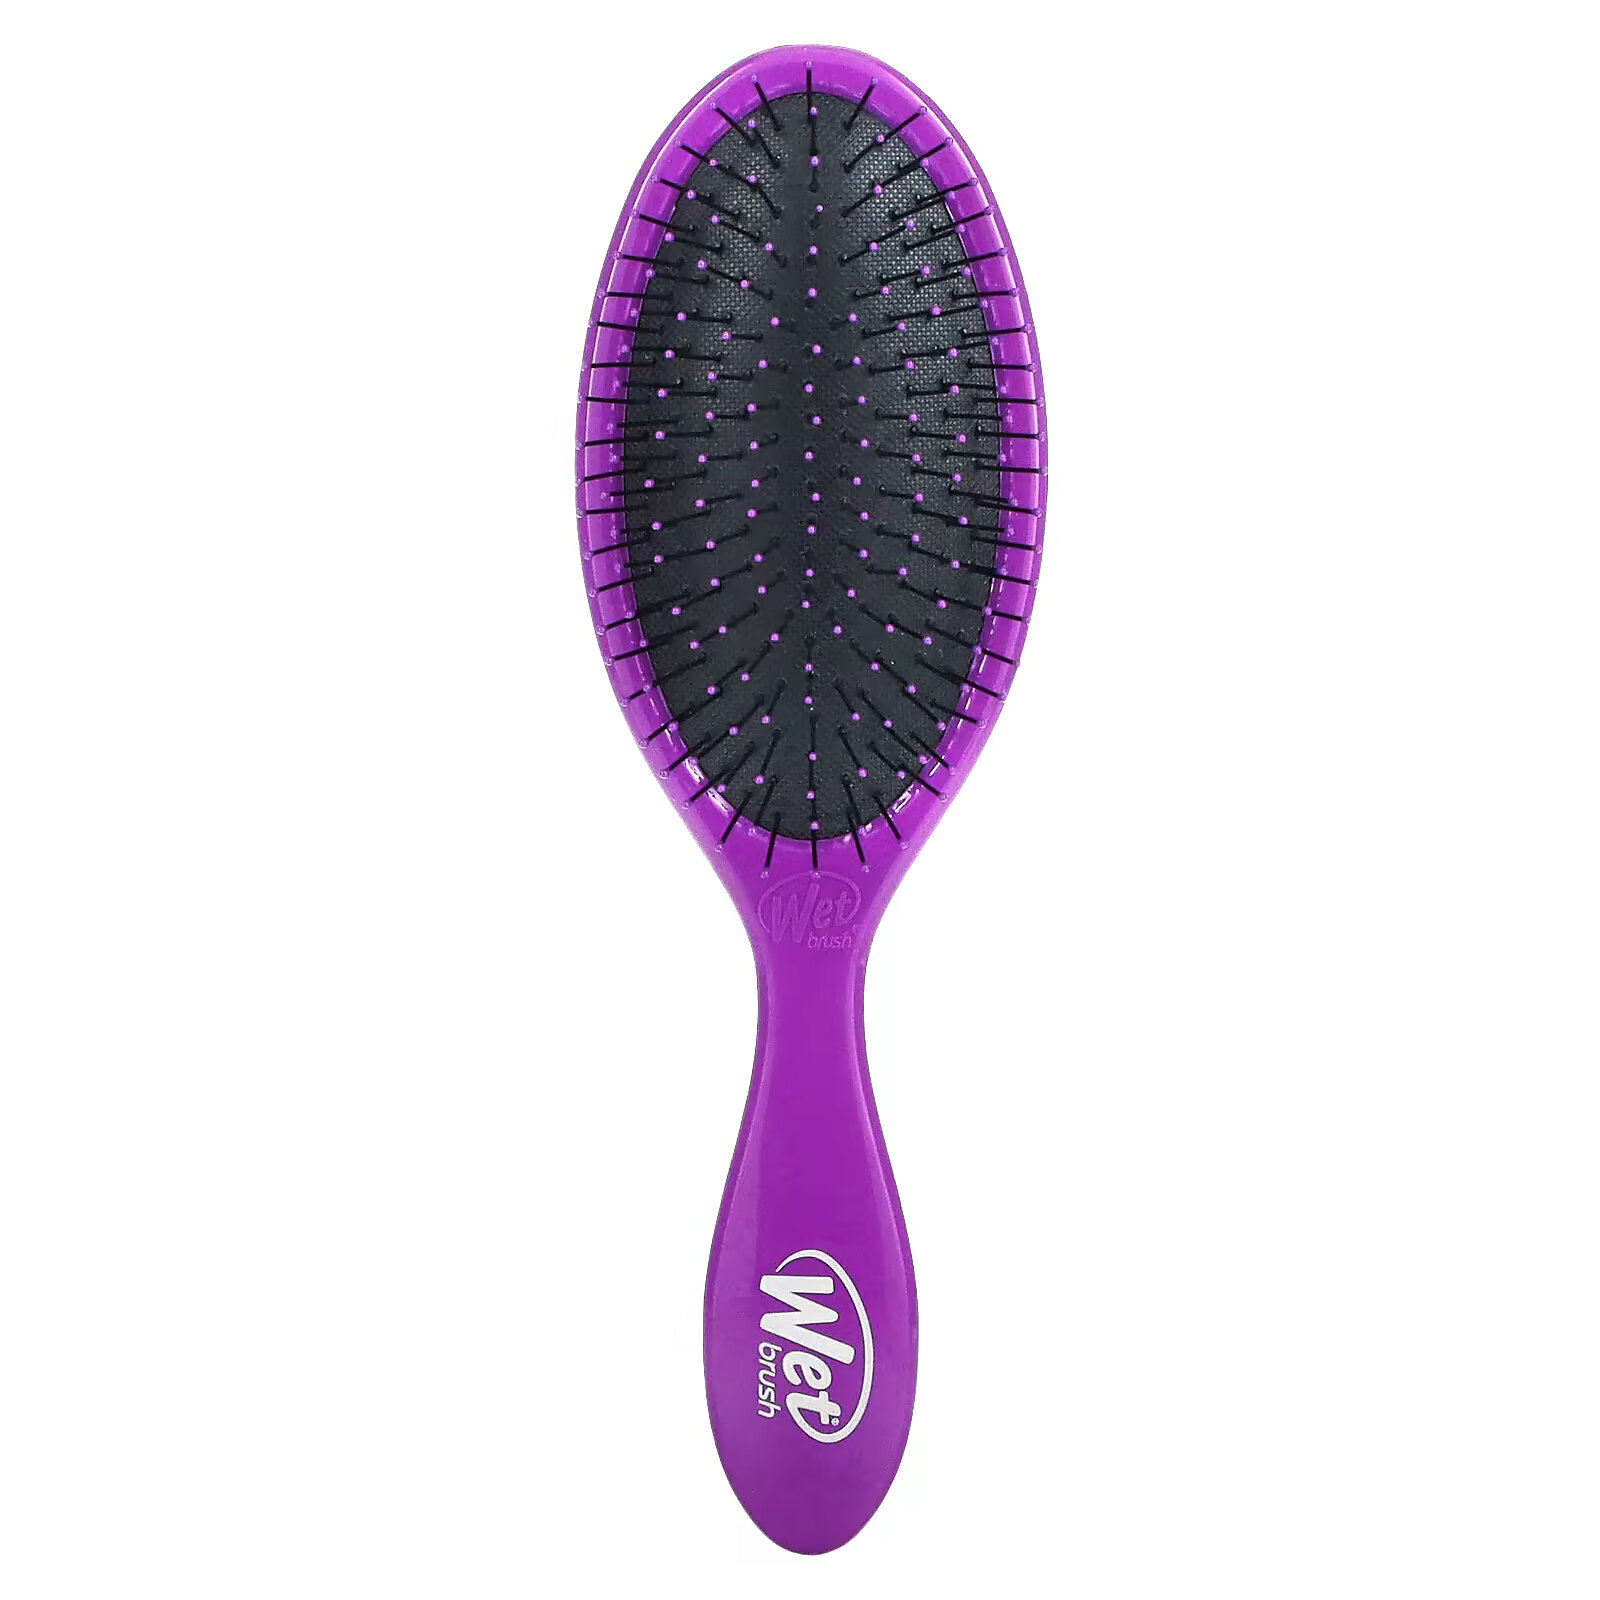 Wet Brush, Щетка для распутывания волос Original Detangler Brush, фиолетовая, 1 шт. wet brush paddle detangler brush щетка для легкого расчесывания пурпурный 1 шт